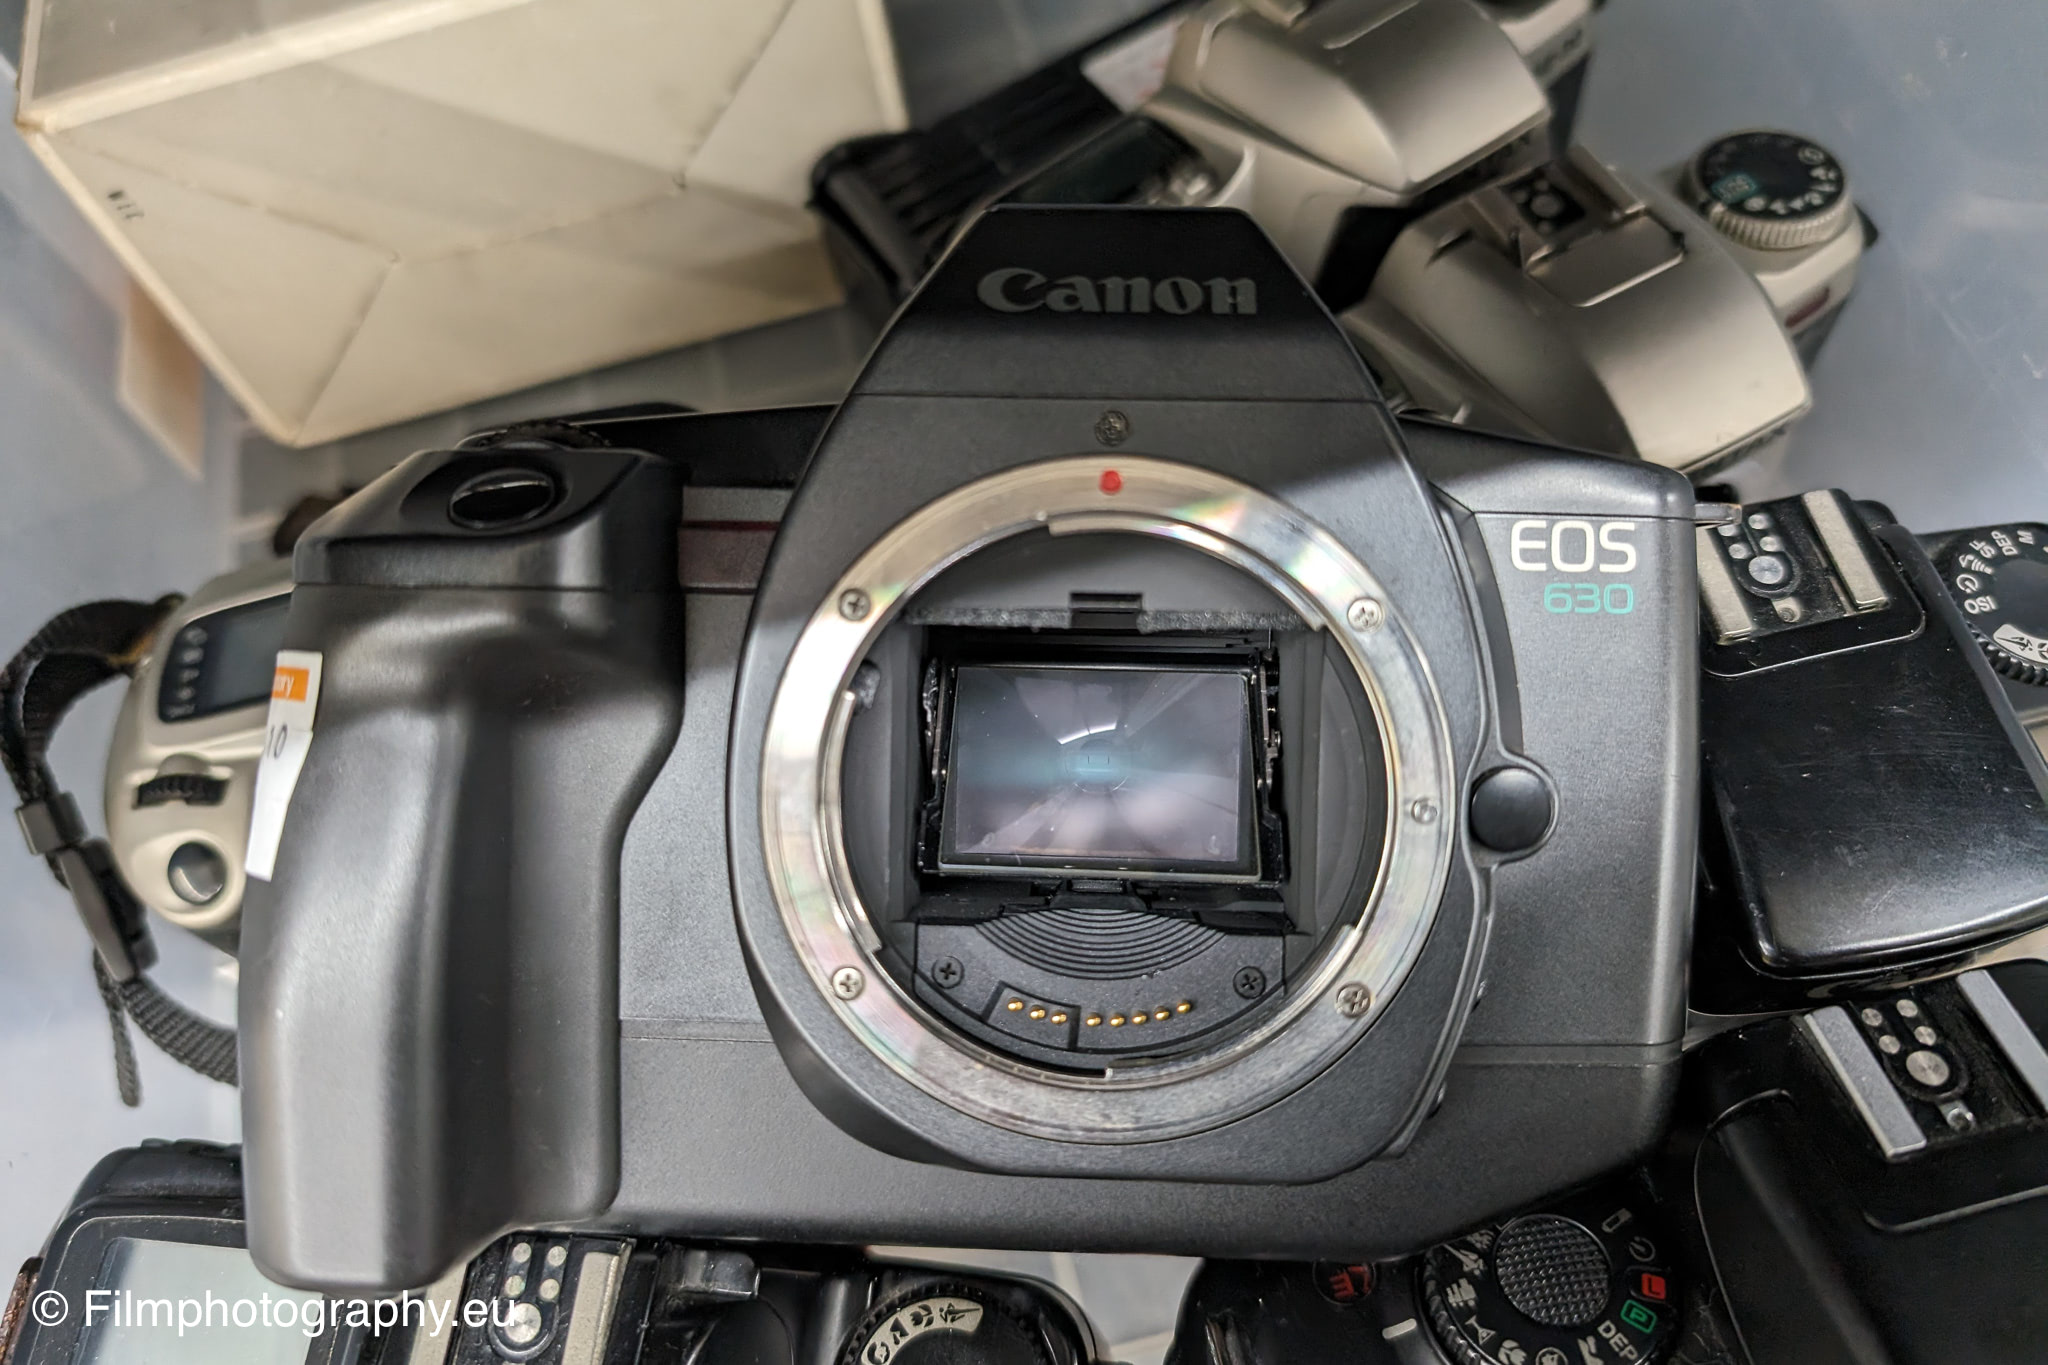 canon-eos-630-slr-camera